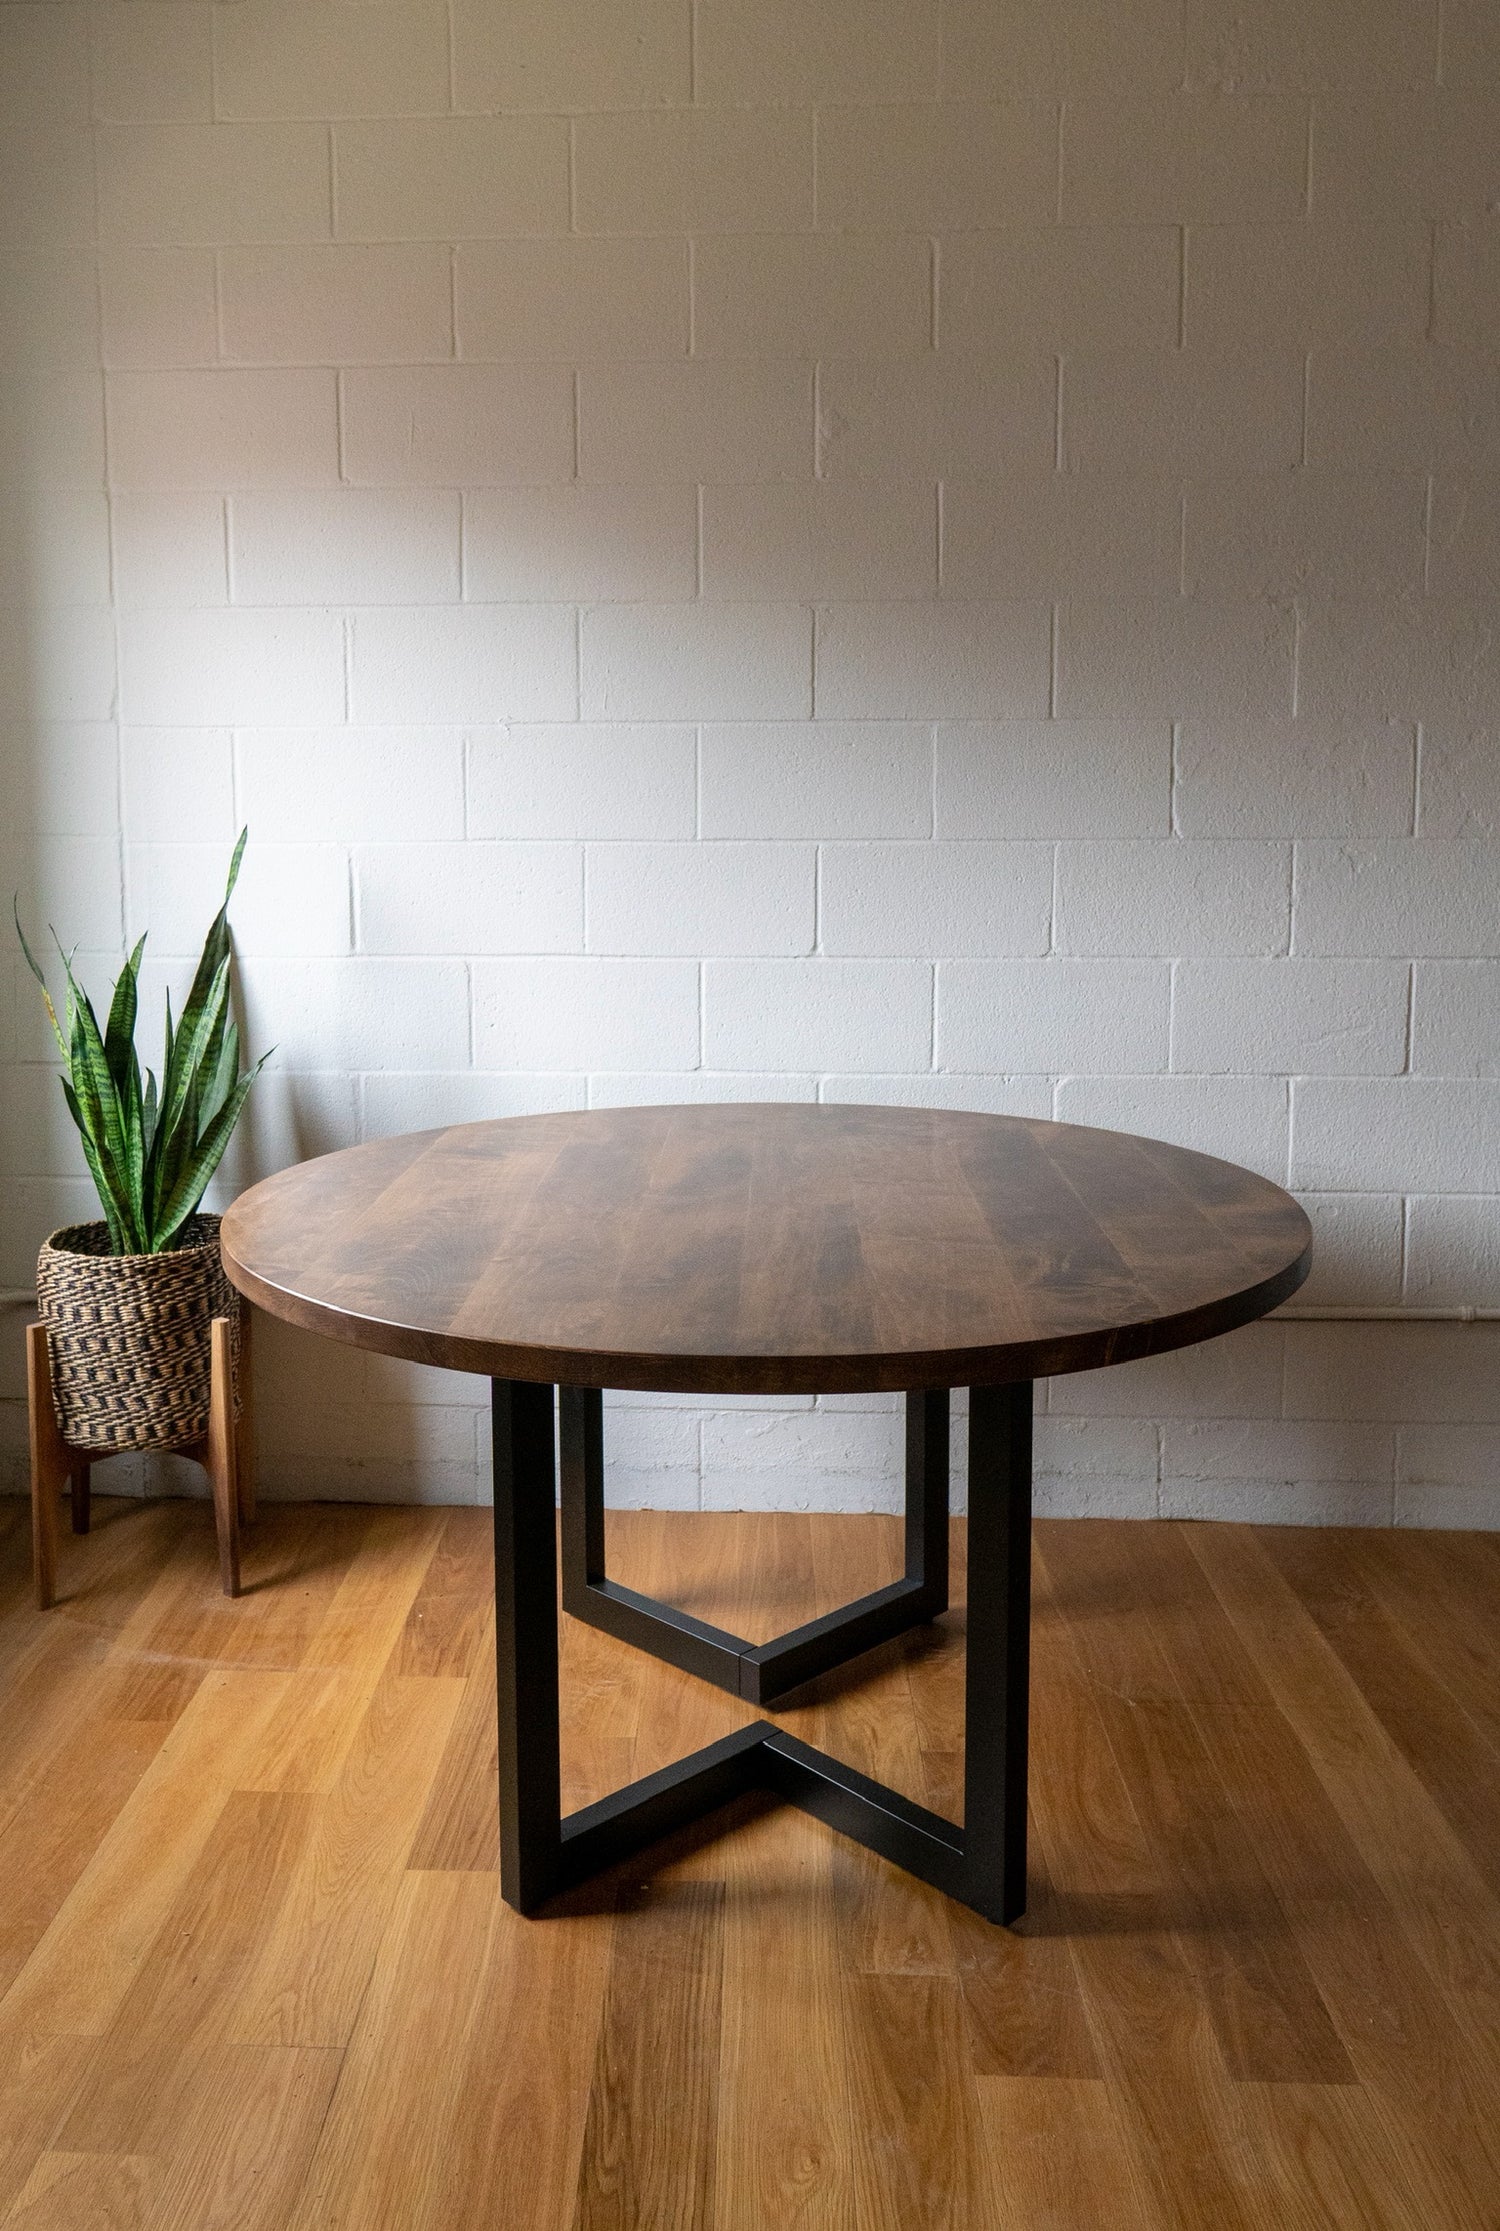 The Modern Bistro Round Table